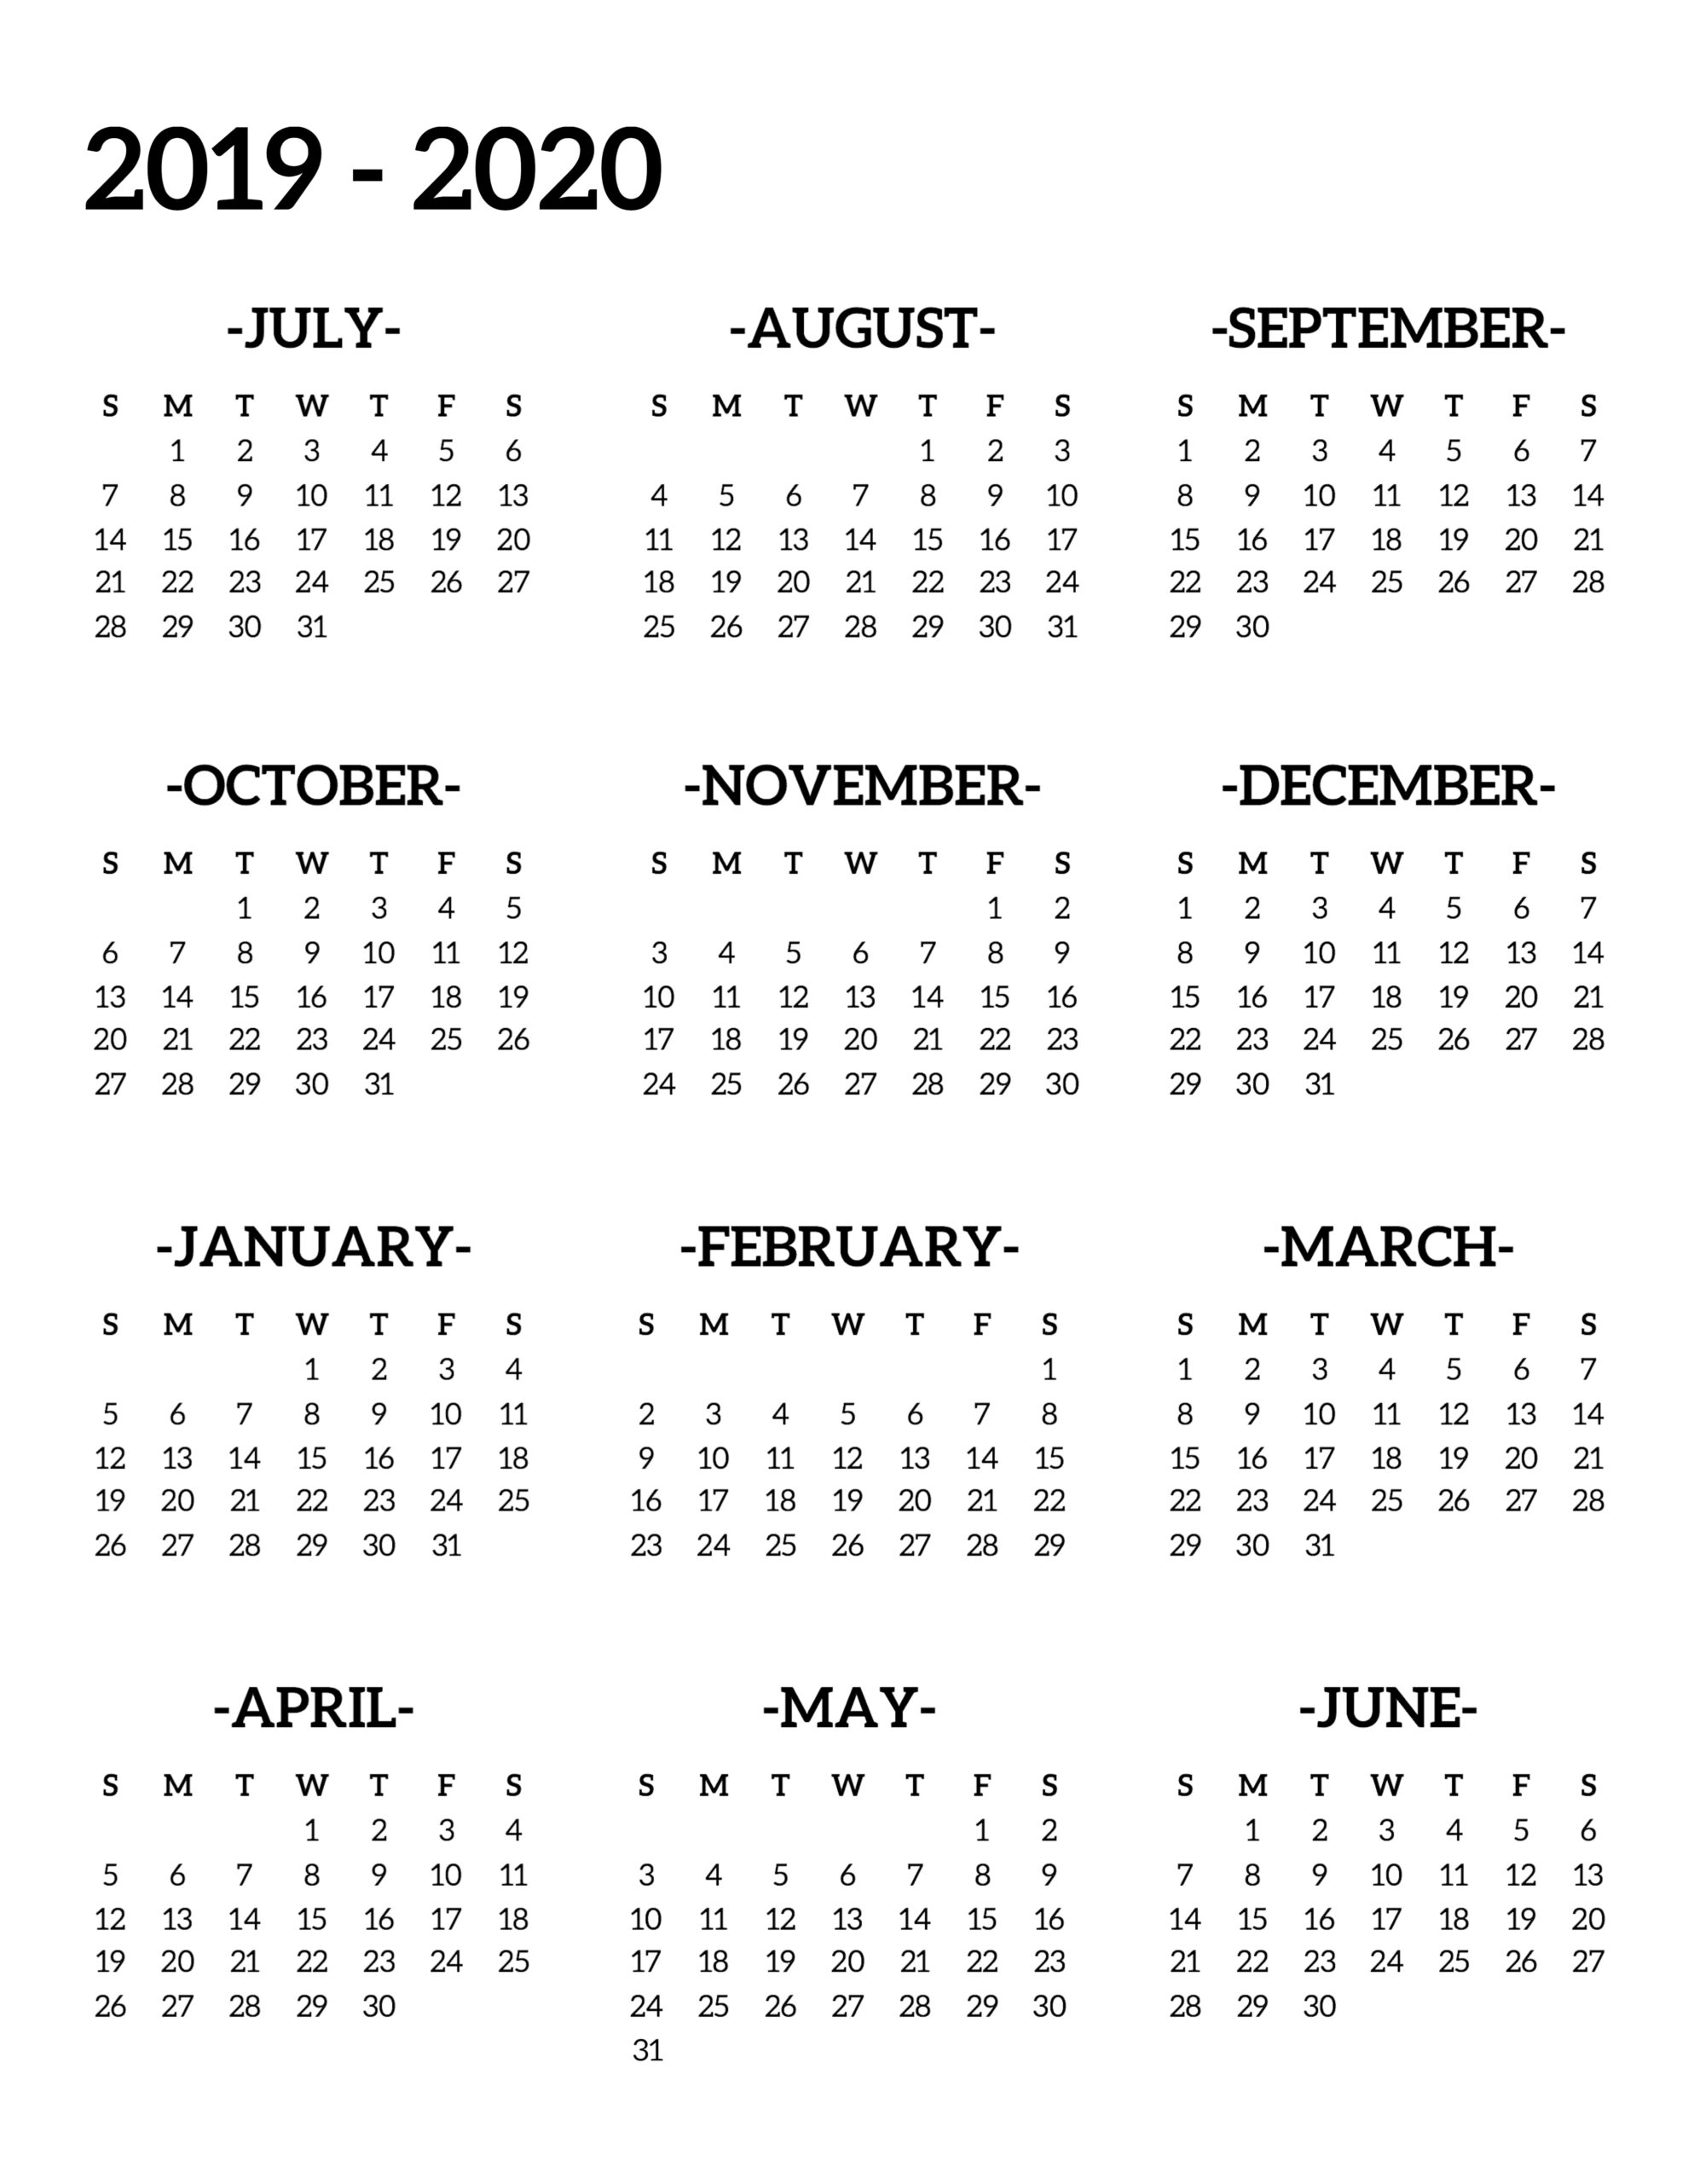 2019-2020 One Page School Calendar Printable | Paper Trail in Free Printable Academic Calendar 2019-2020